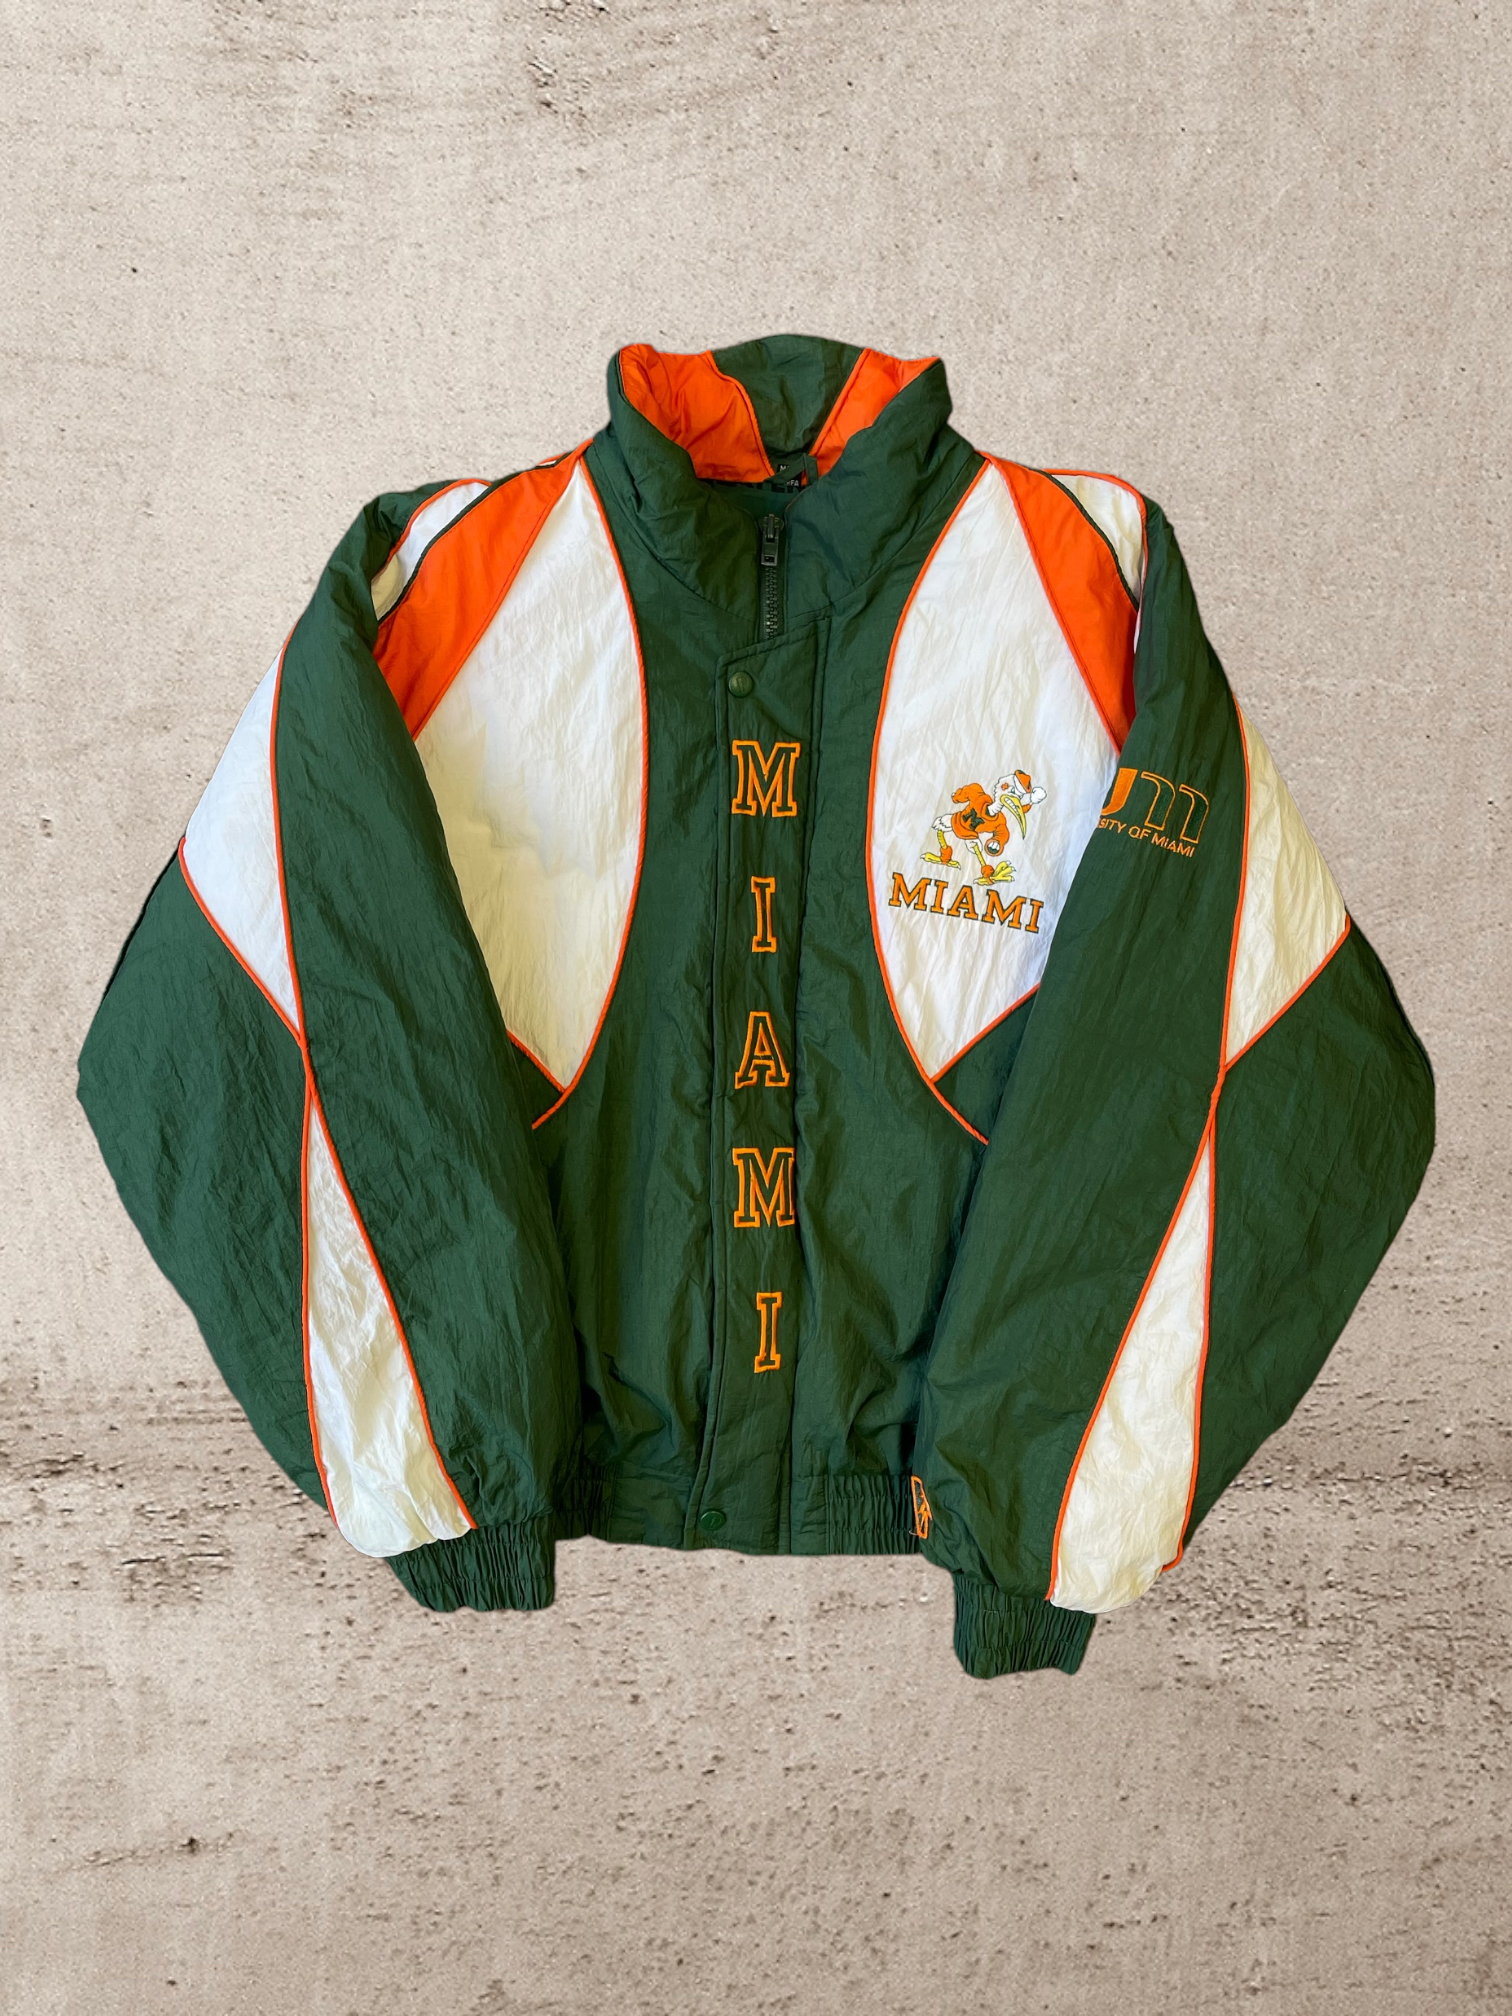 90s University of Miami ProPlayer Puffer Jacket - Large/X-Large